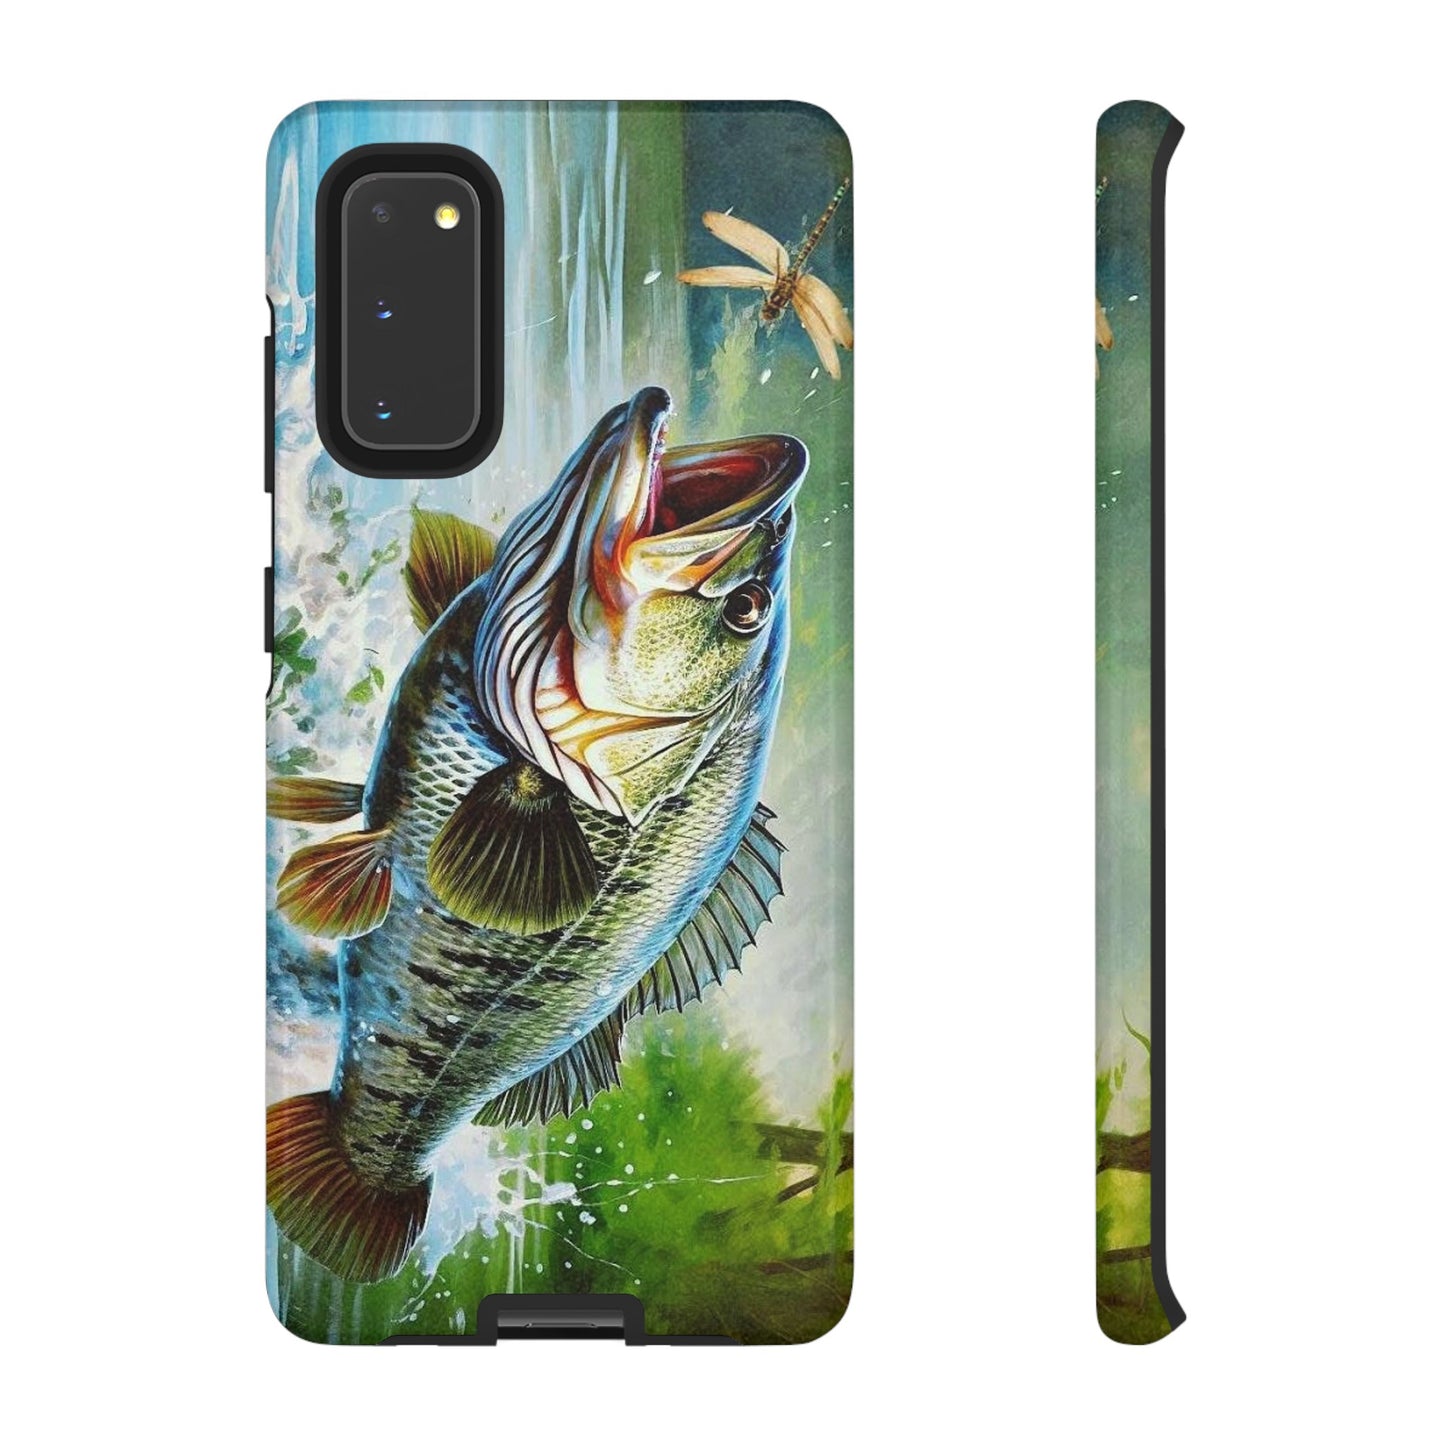 Fishing Phone Case, iPhone Case, Samsung Case, Google Pixel Case